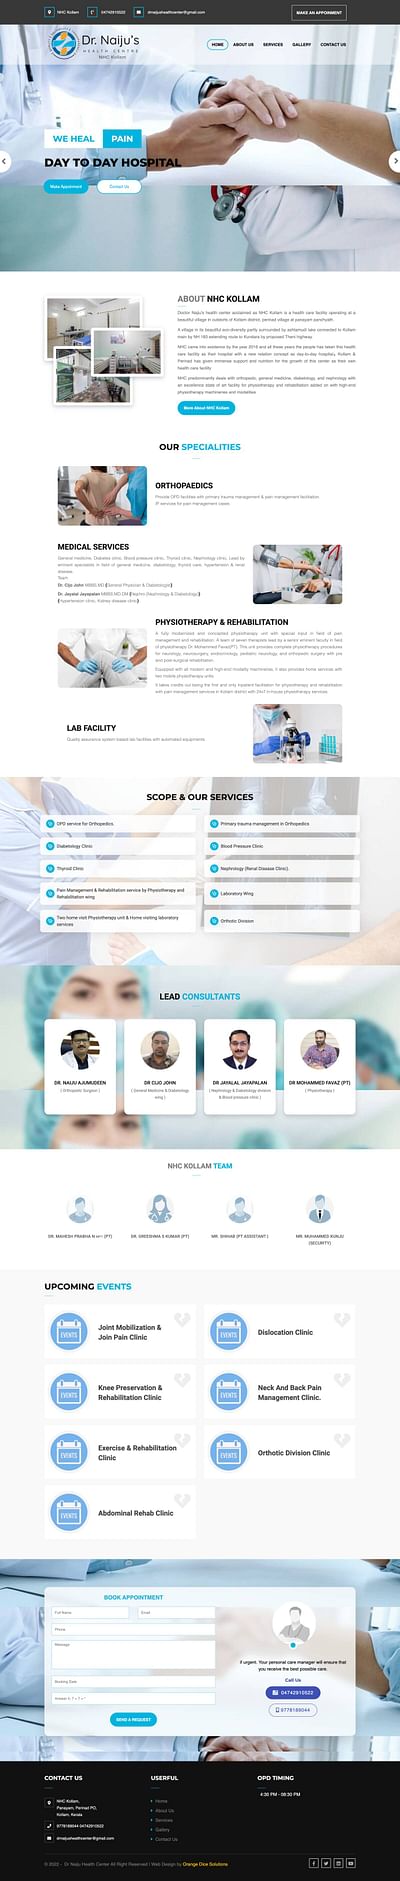 Website developed for NHC hospital Kollam - Pubblicità online